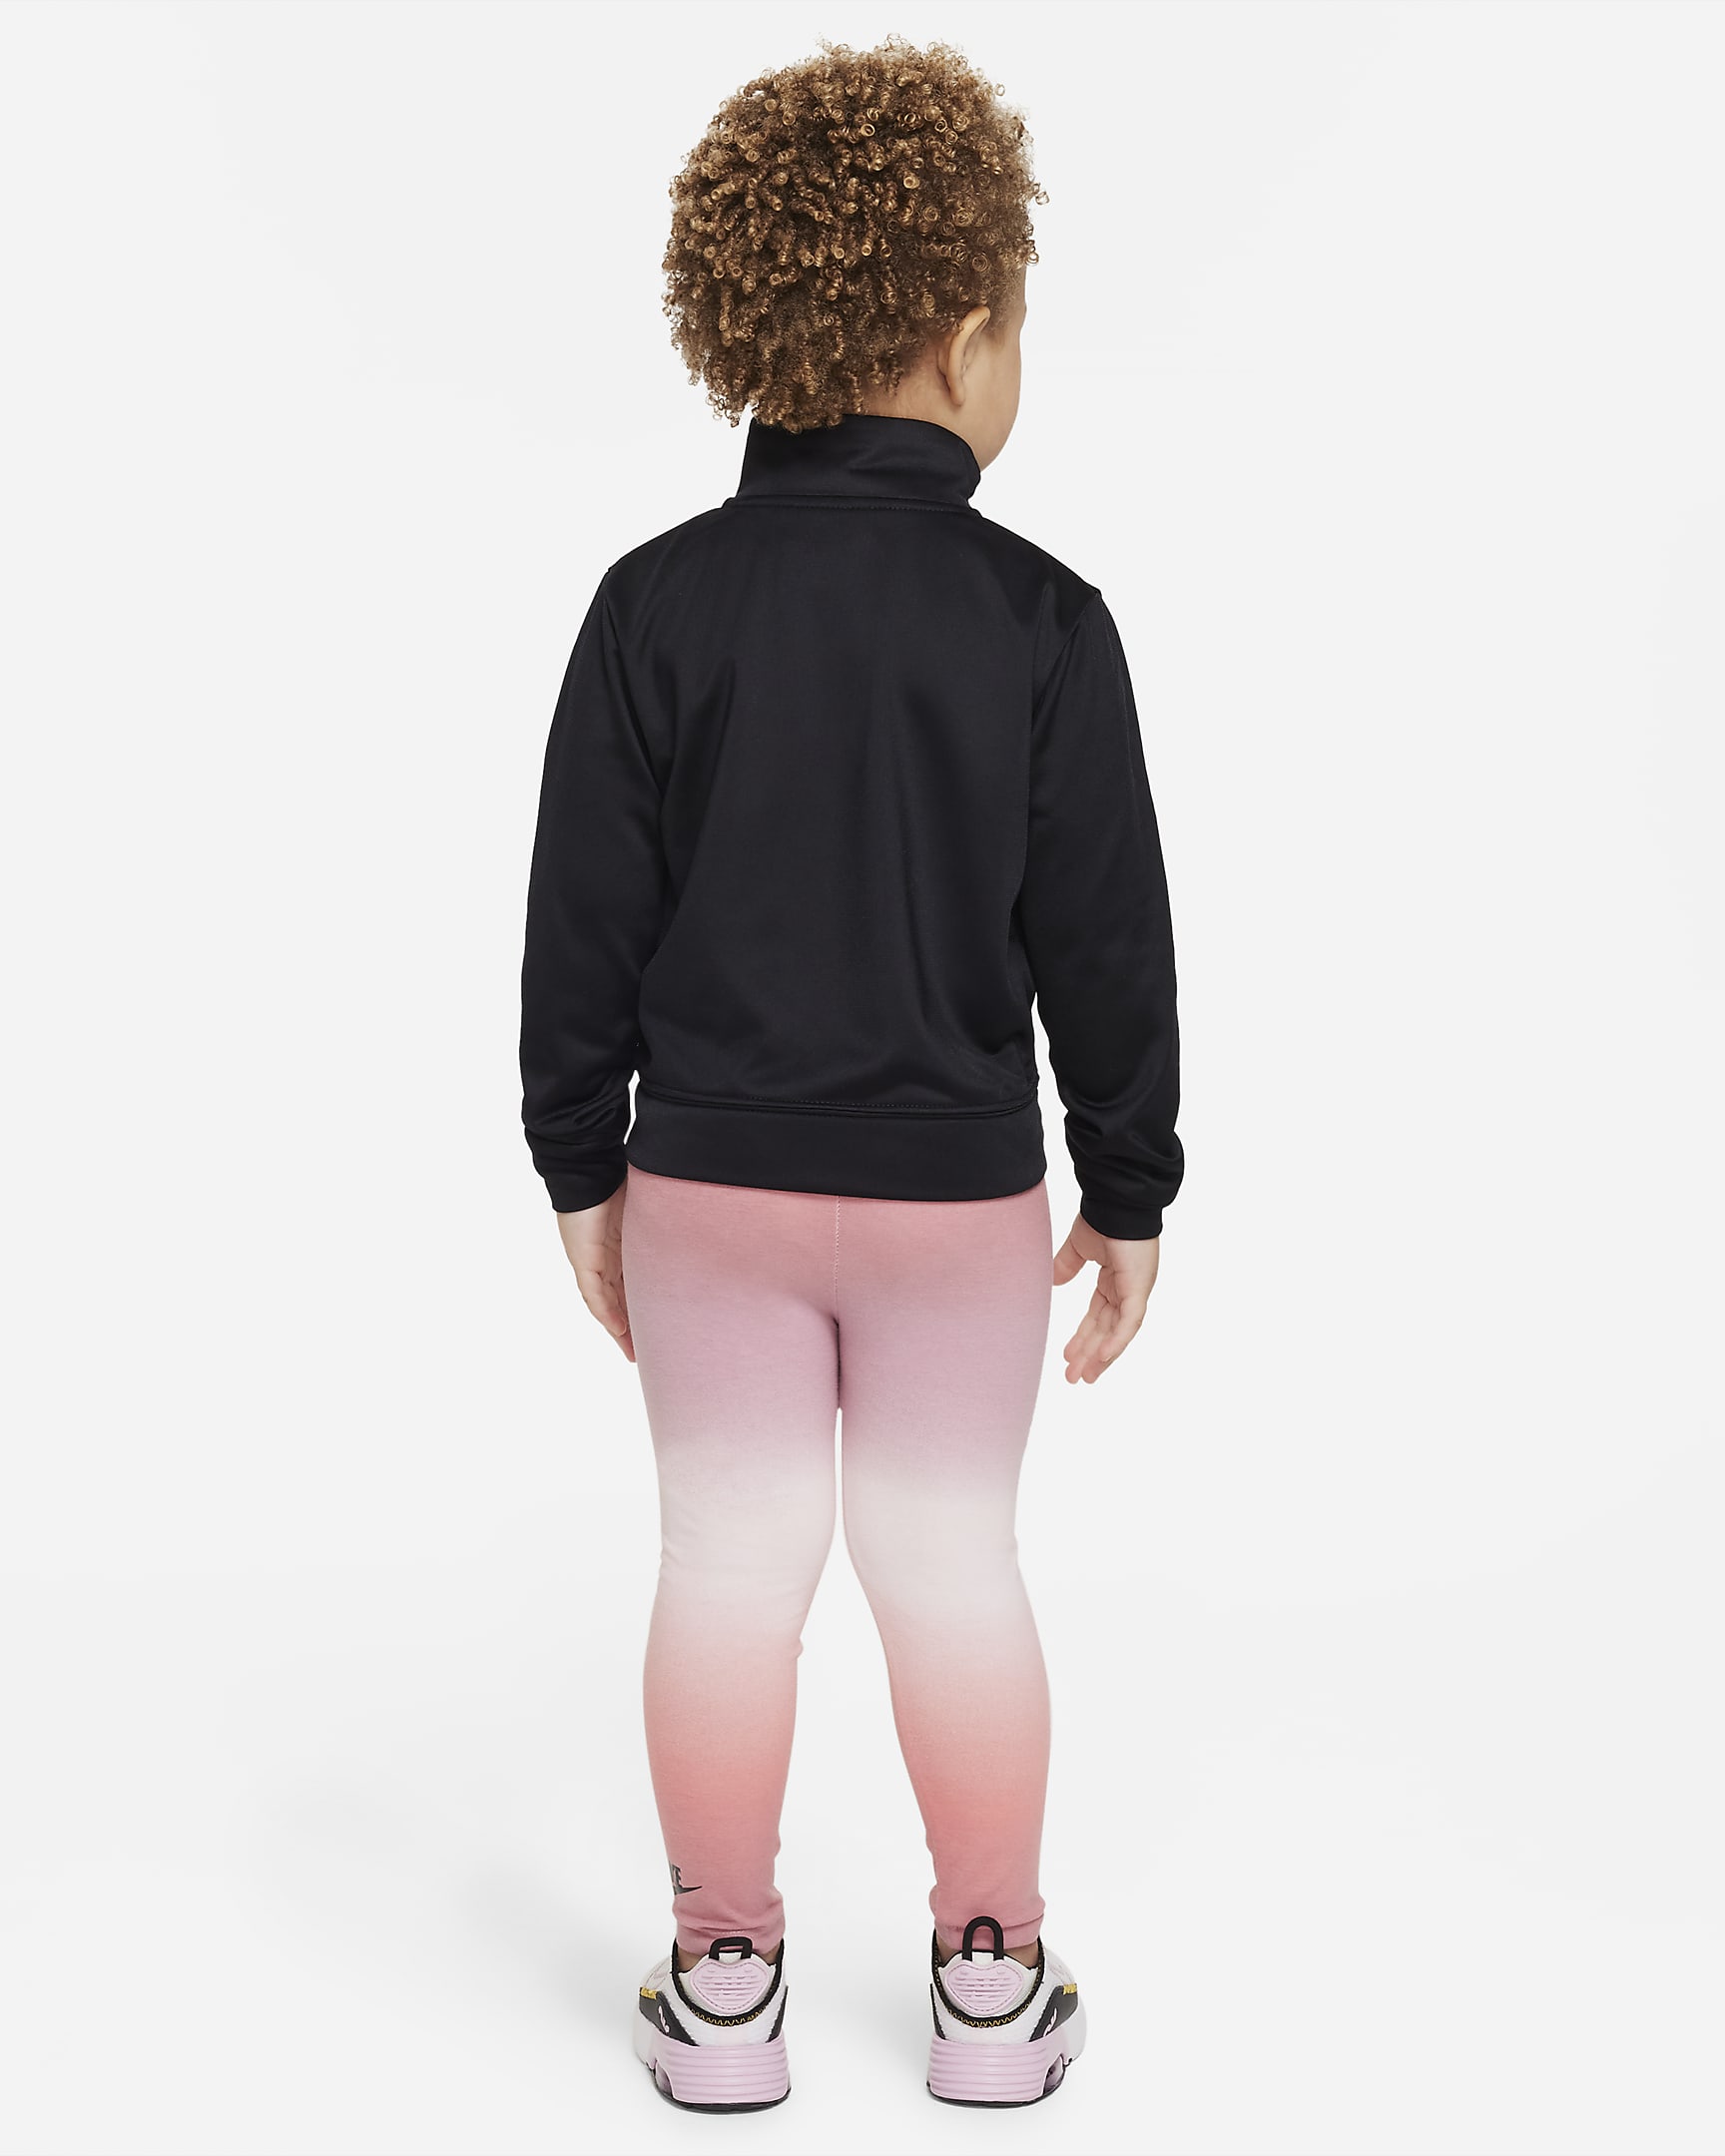 Nike Toddler Tricot Jacket and Printed Leggings Set. Nike.com